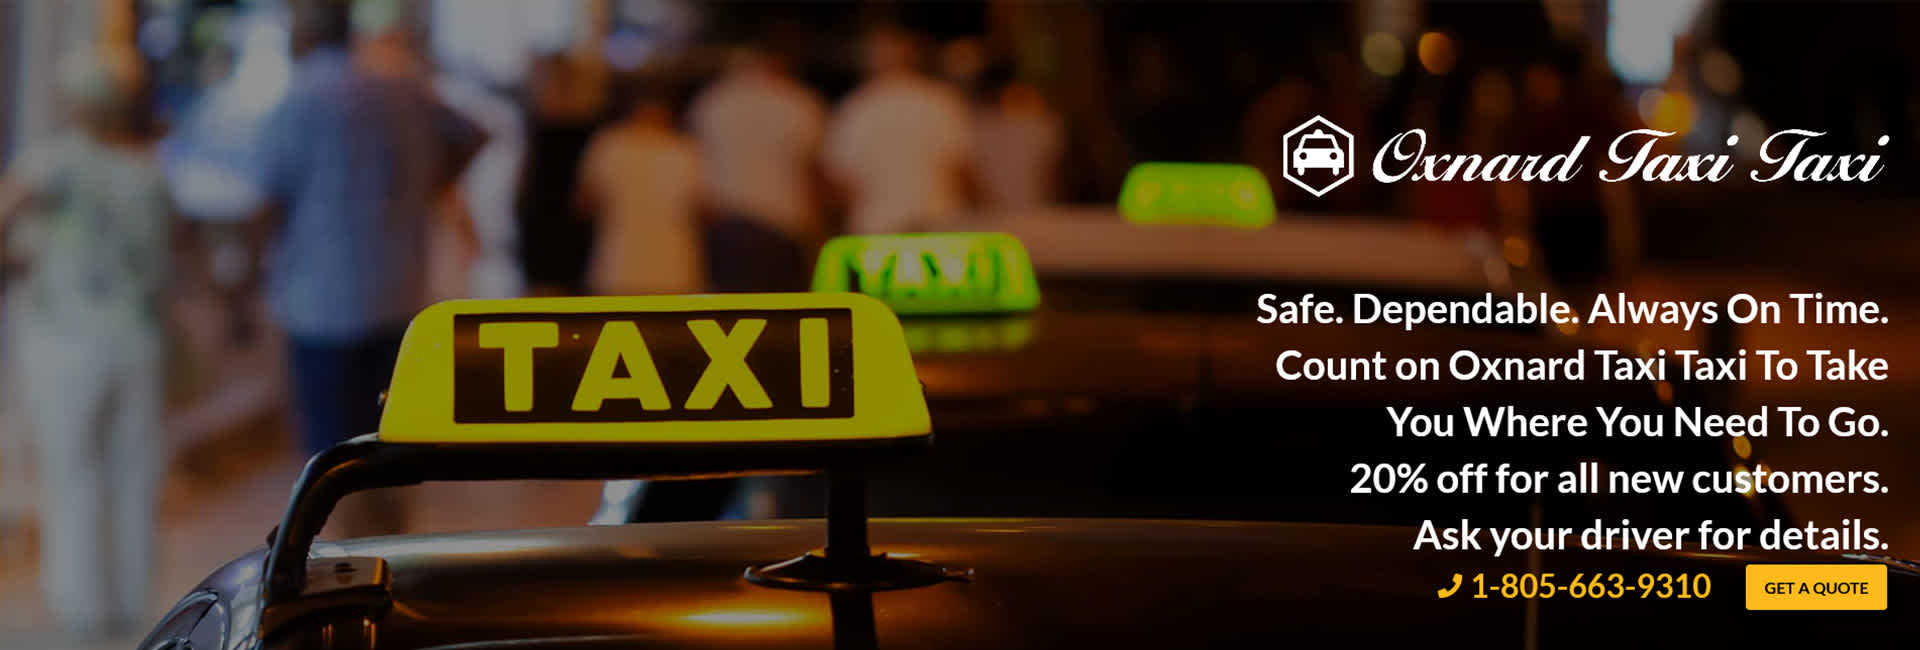 Oxnard Taxi Taxi Website Project